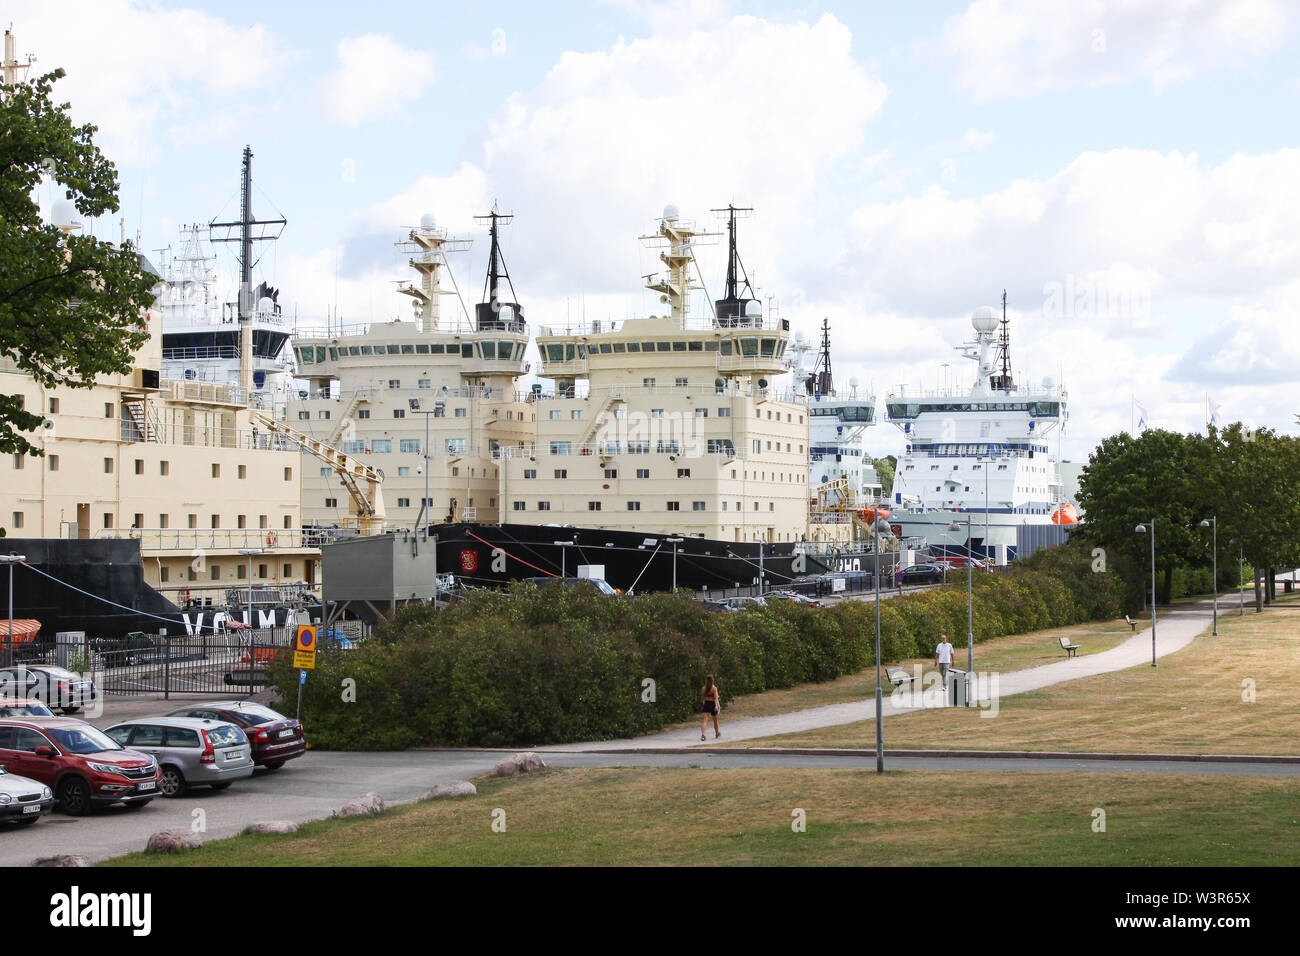 Icebreaker Flotte im Hafen von Katajanokka, Helsinki, Finnland | Sommer 2018 stationiert Stockfoto